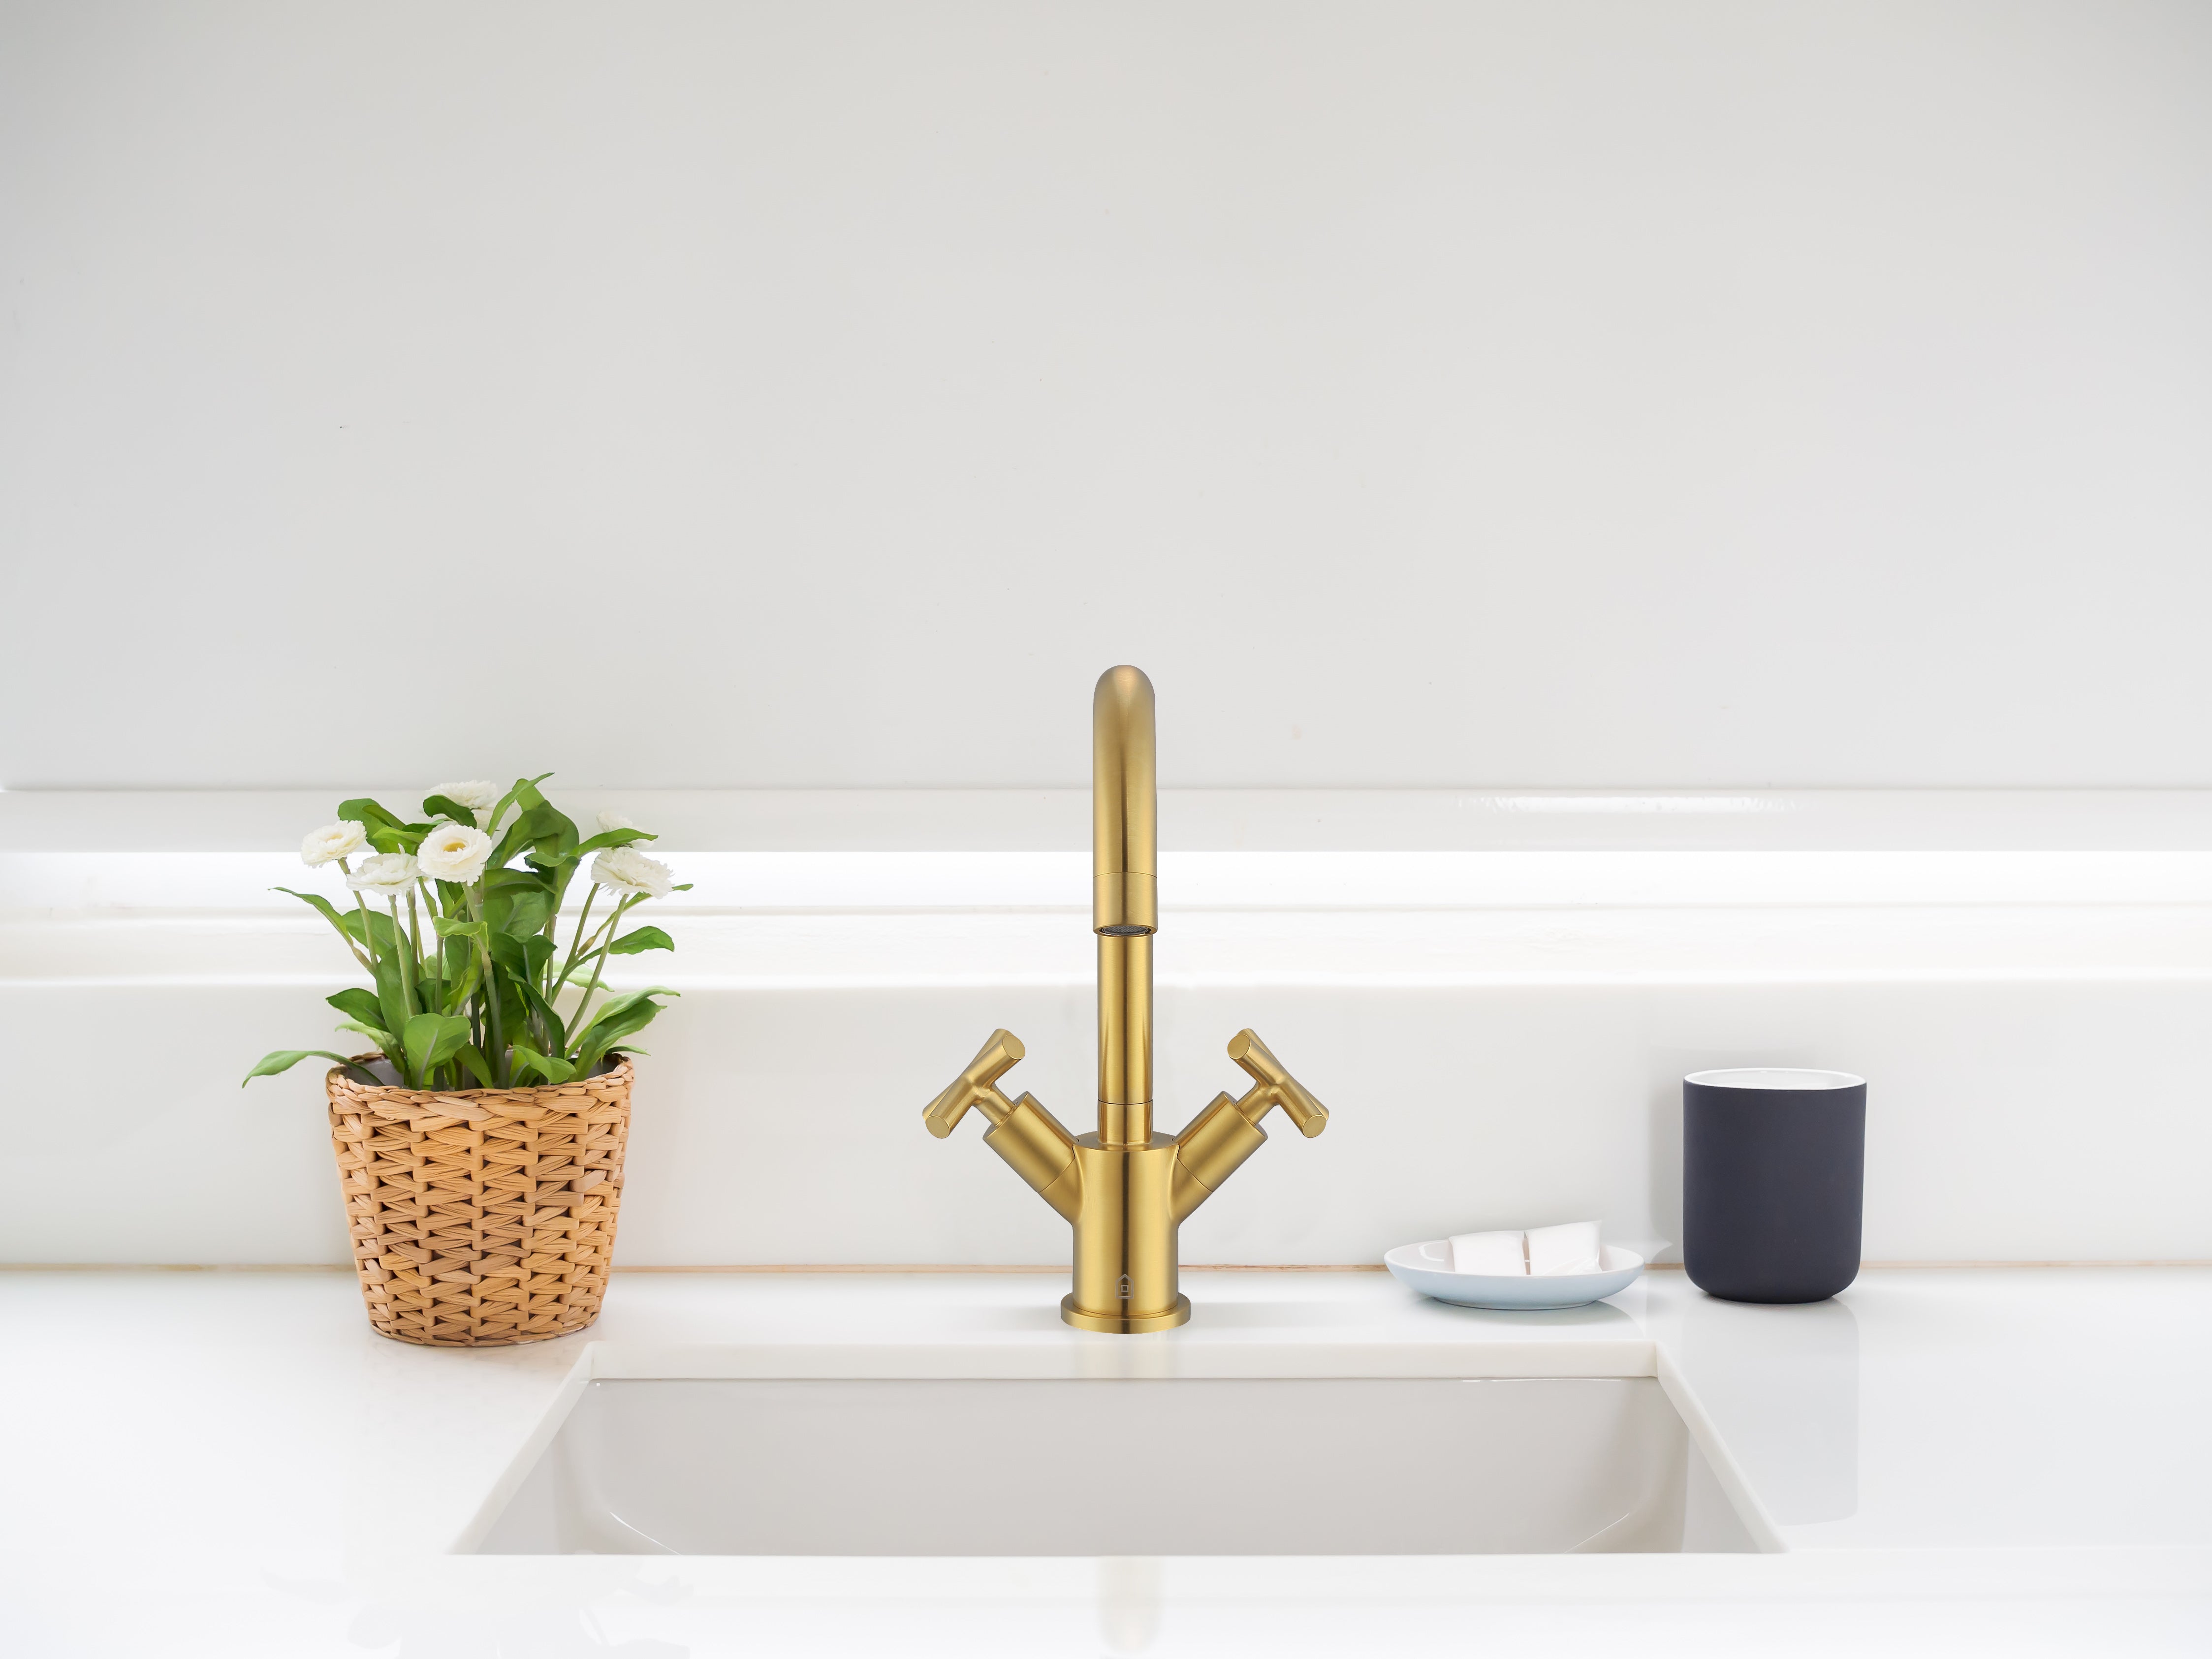 Ava Series Single Hole Cross Handle Bathroom Faucet in Brushed Titanium Gold